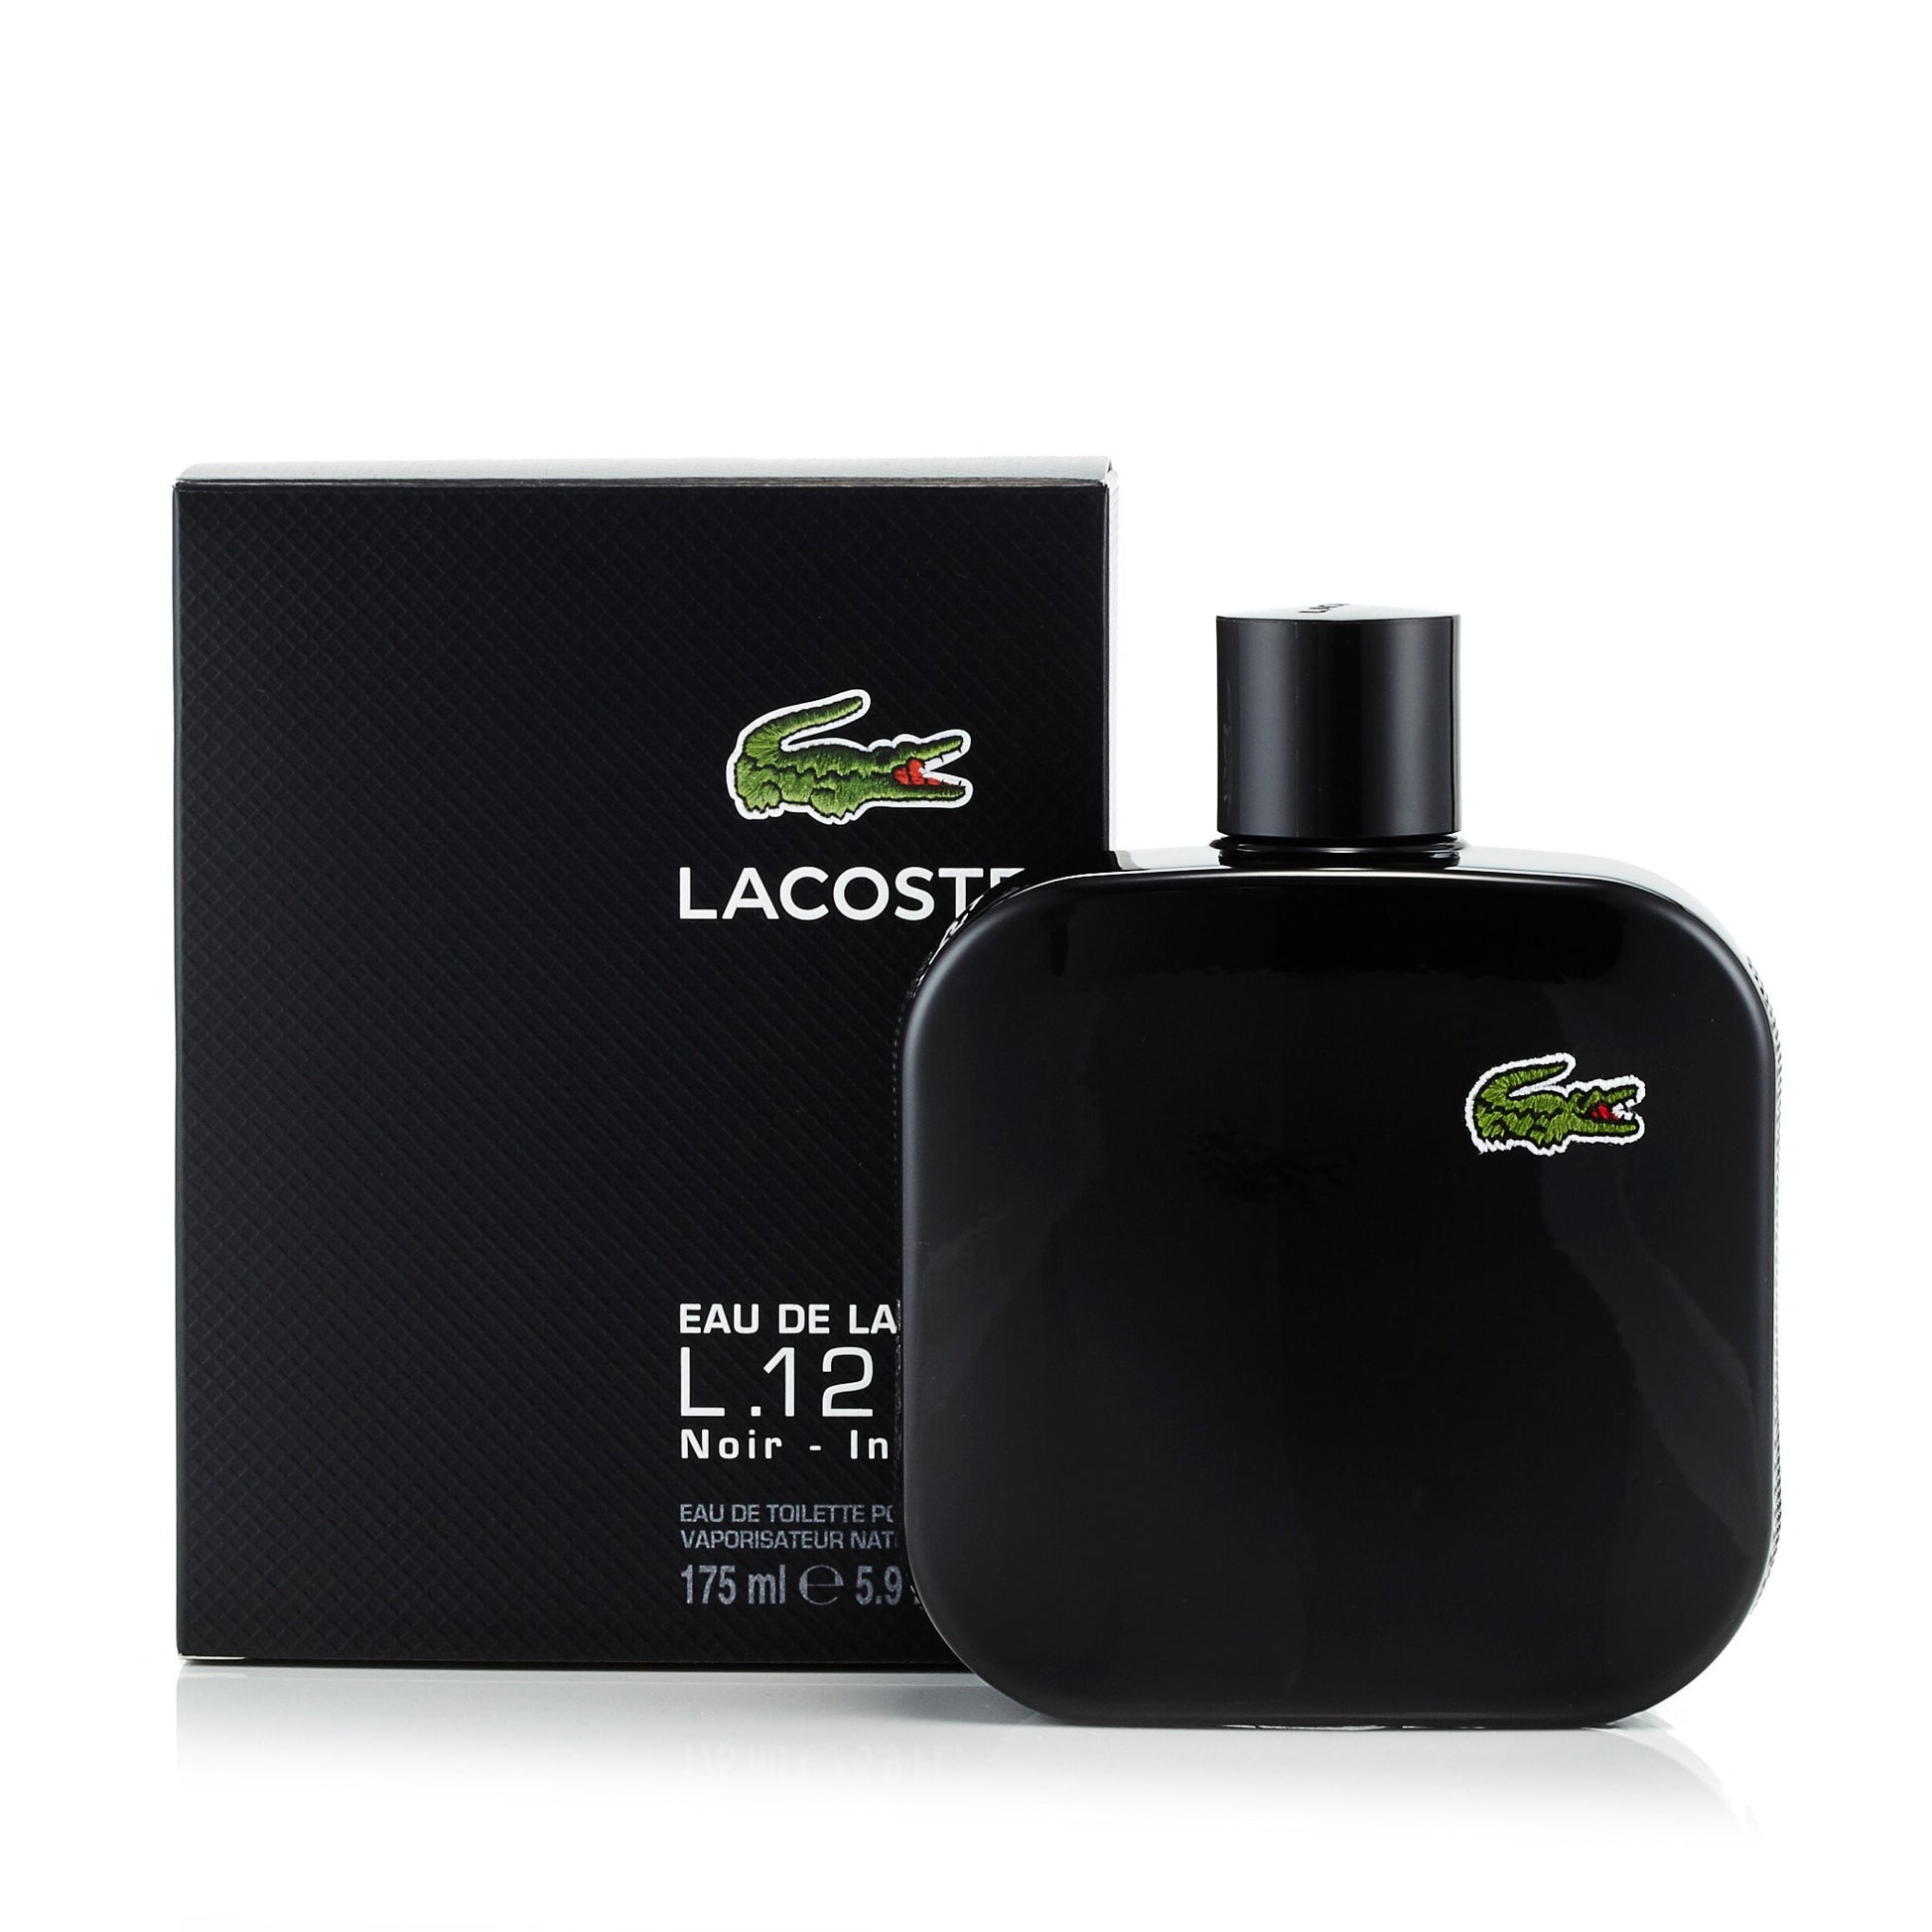  L.12.12 Noir Eau de Toilette Spray for Men by Lacoste 5.9 oz. Click to open in modal